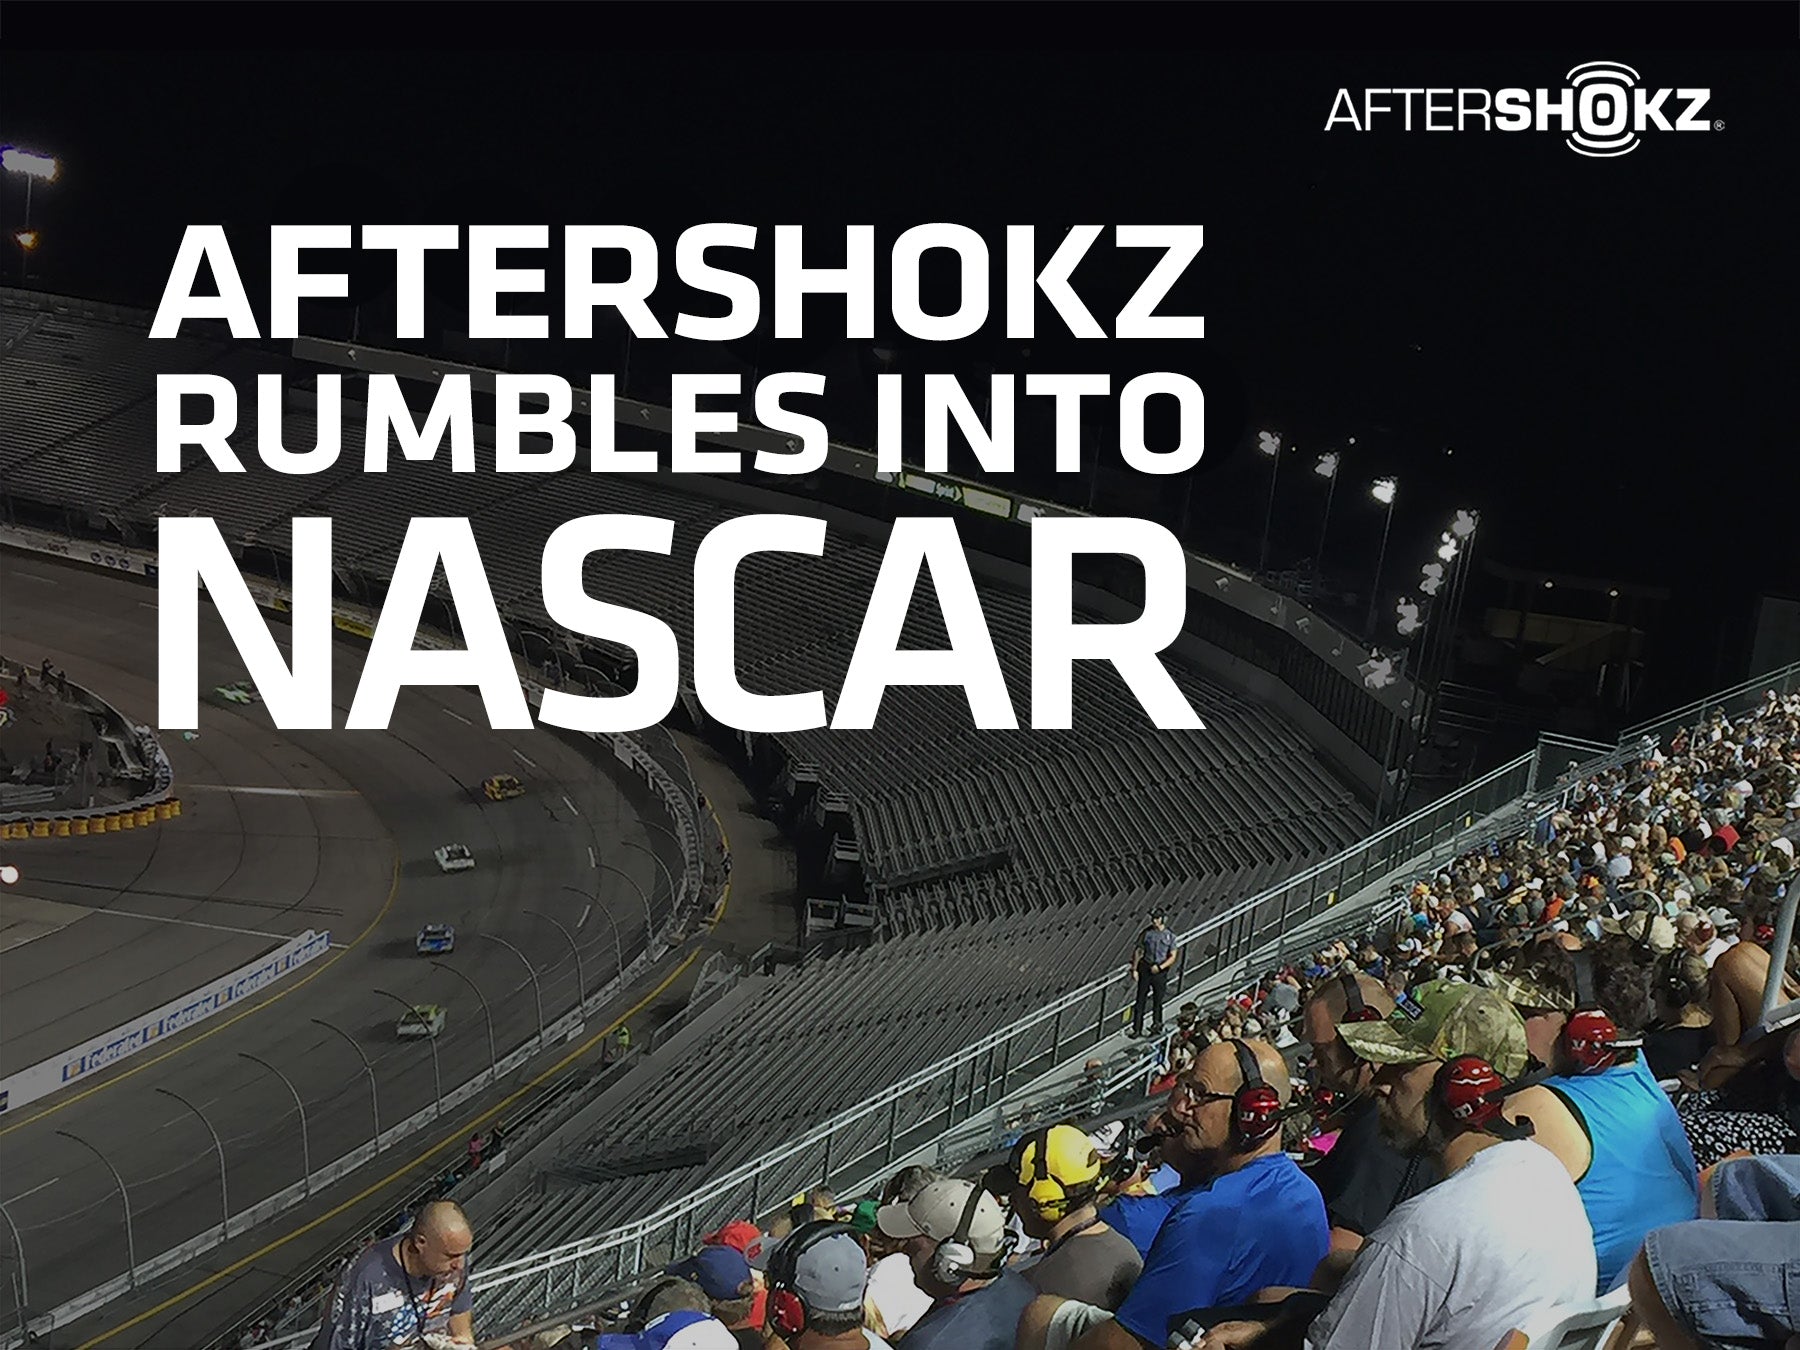 AfterShokz rumbles into NASCAR